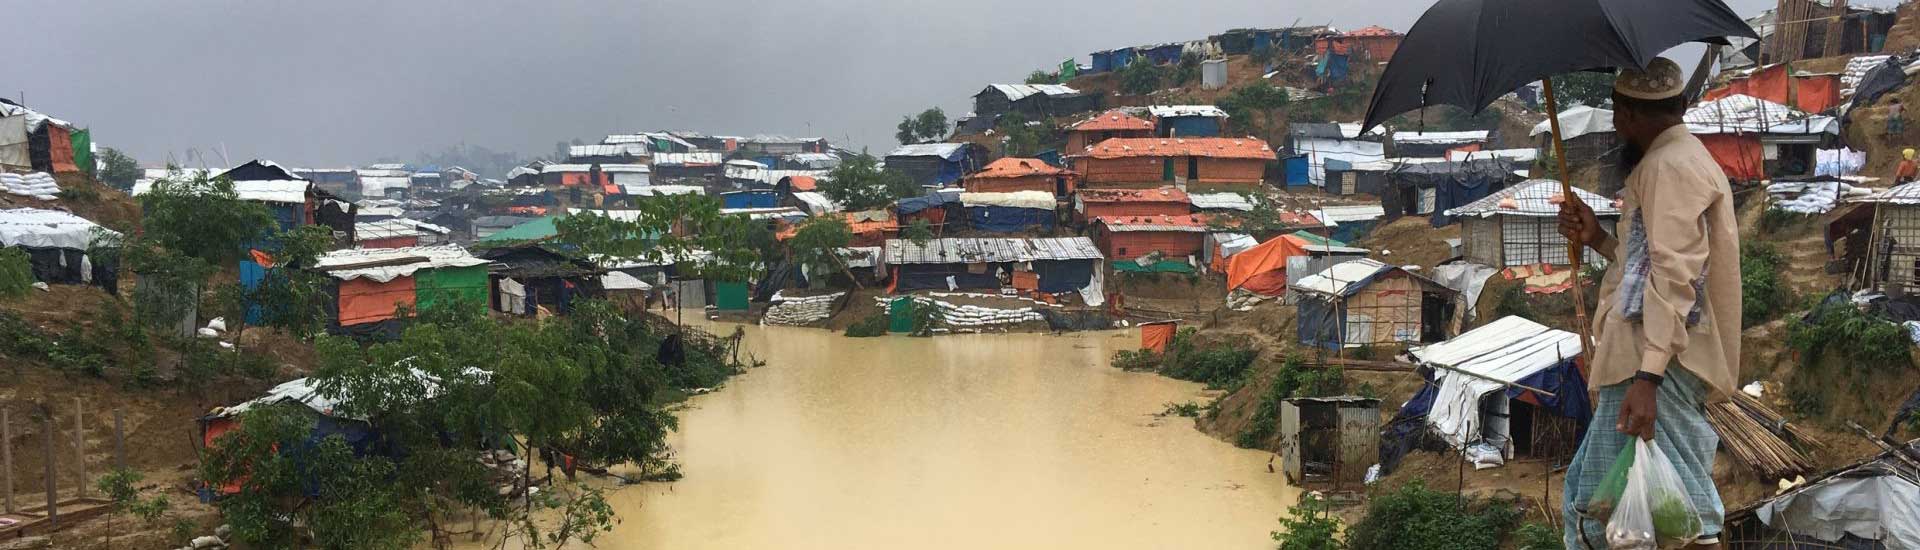 Monsunzeit bedroht Flüchtlinge in Bangladesh